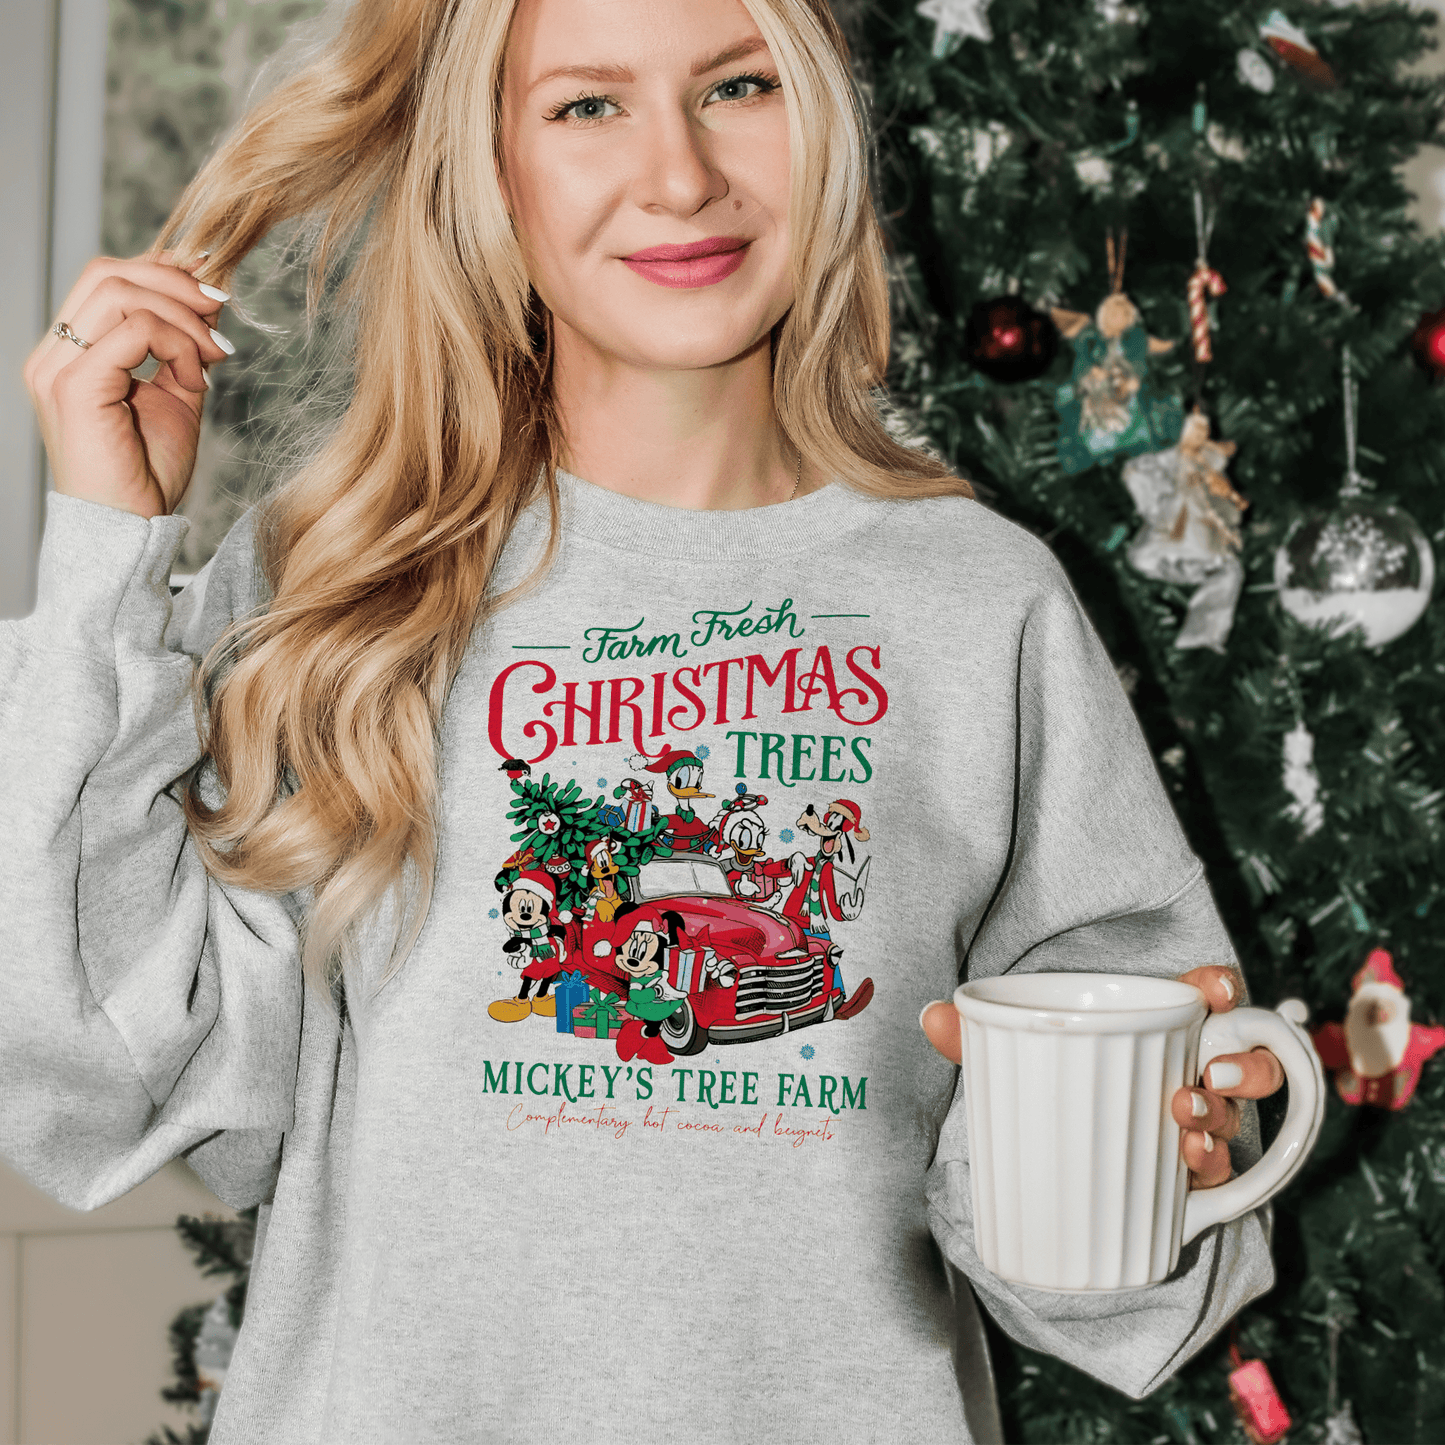 Vintage Pickup and Cartoon Friends Christmas Tree Farm Fresh Sweatshirt